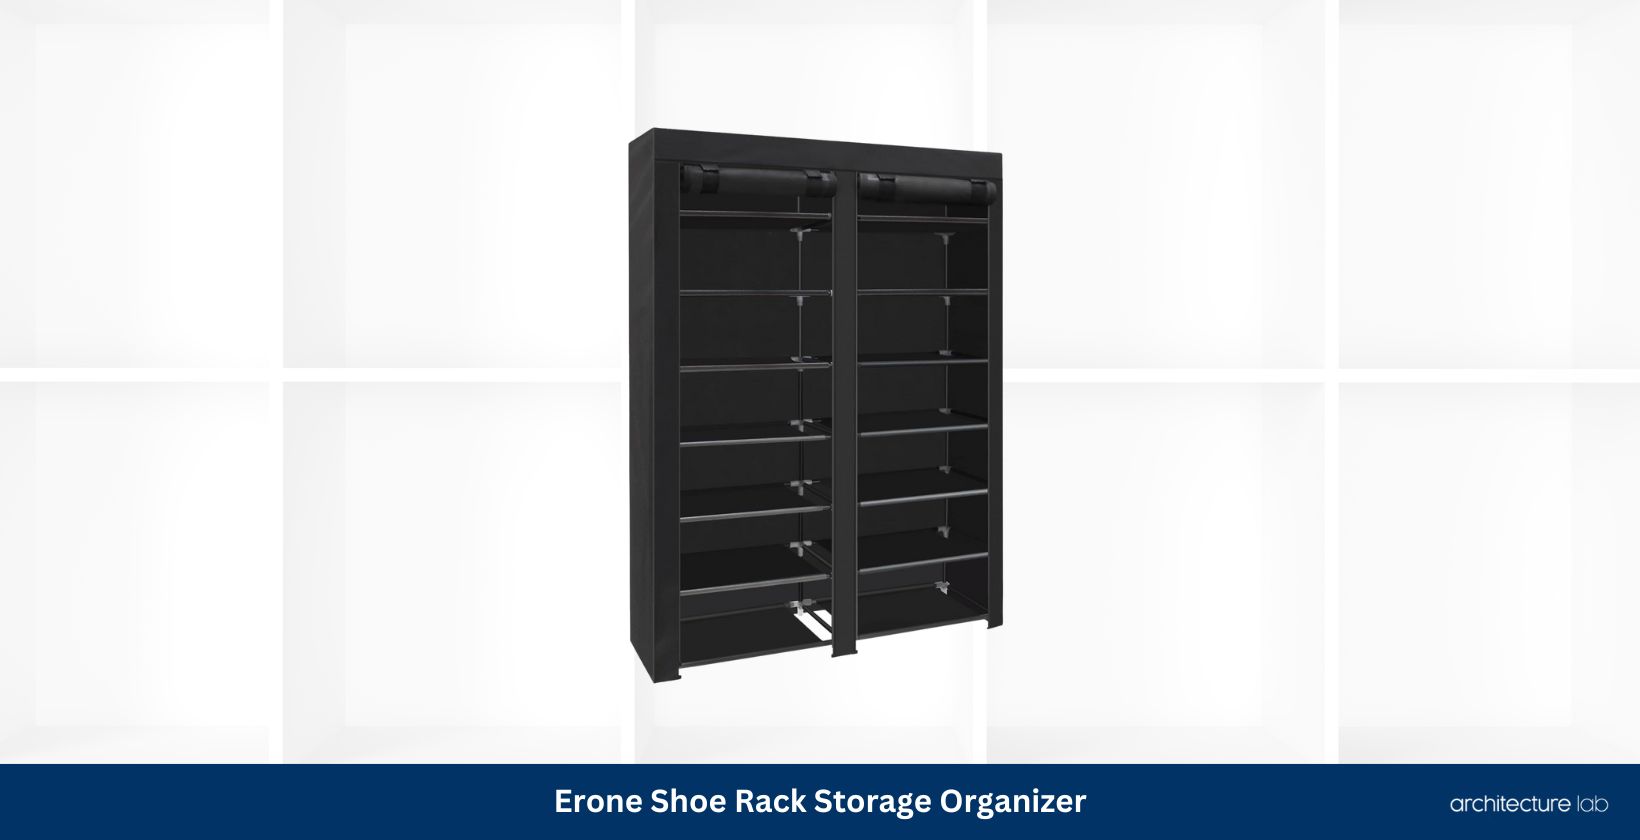 Erone shoe rack storage organizer